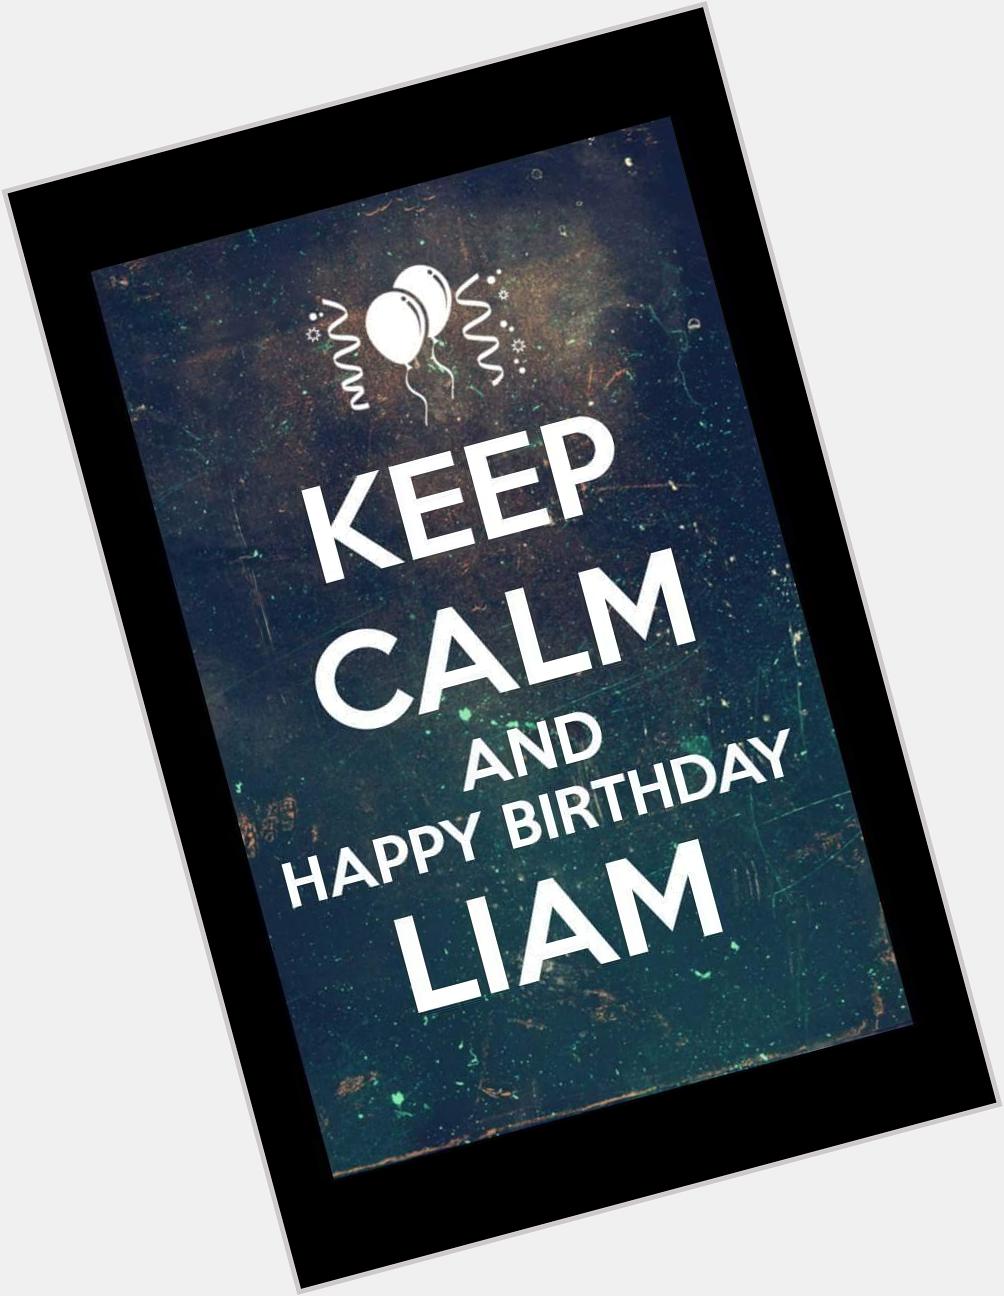  Happy birthday best Liam in the world  